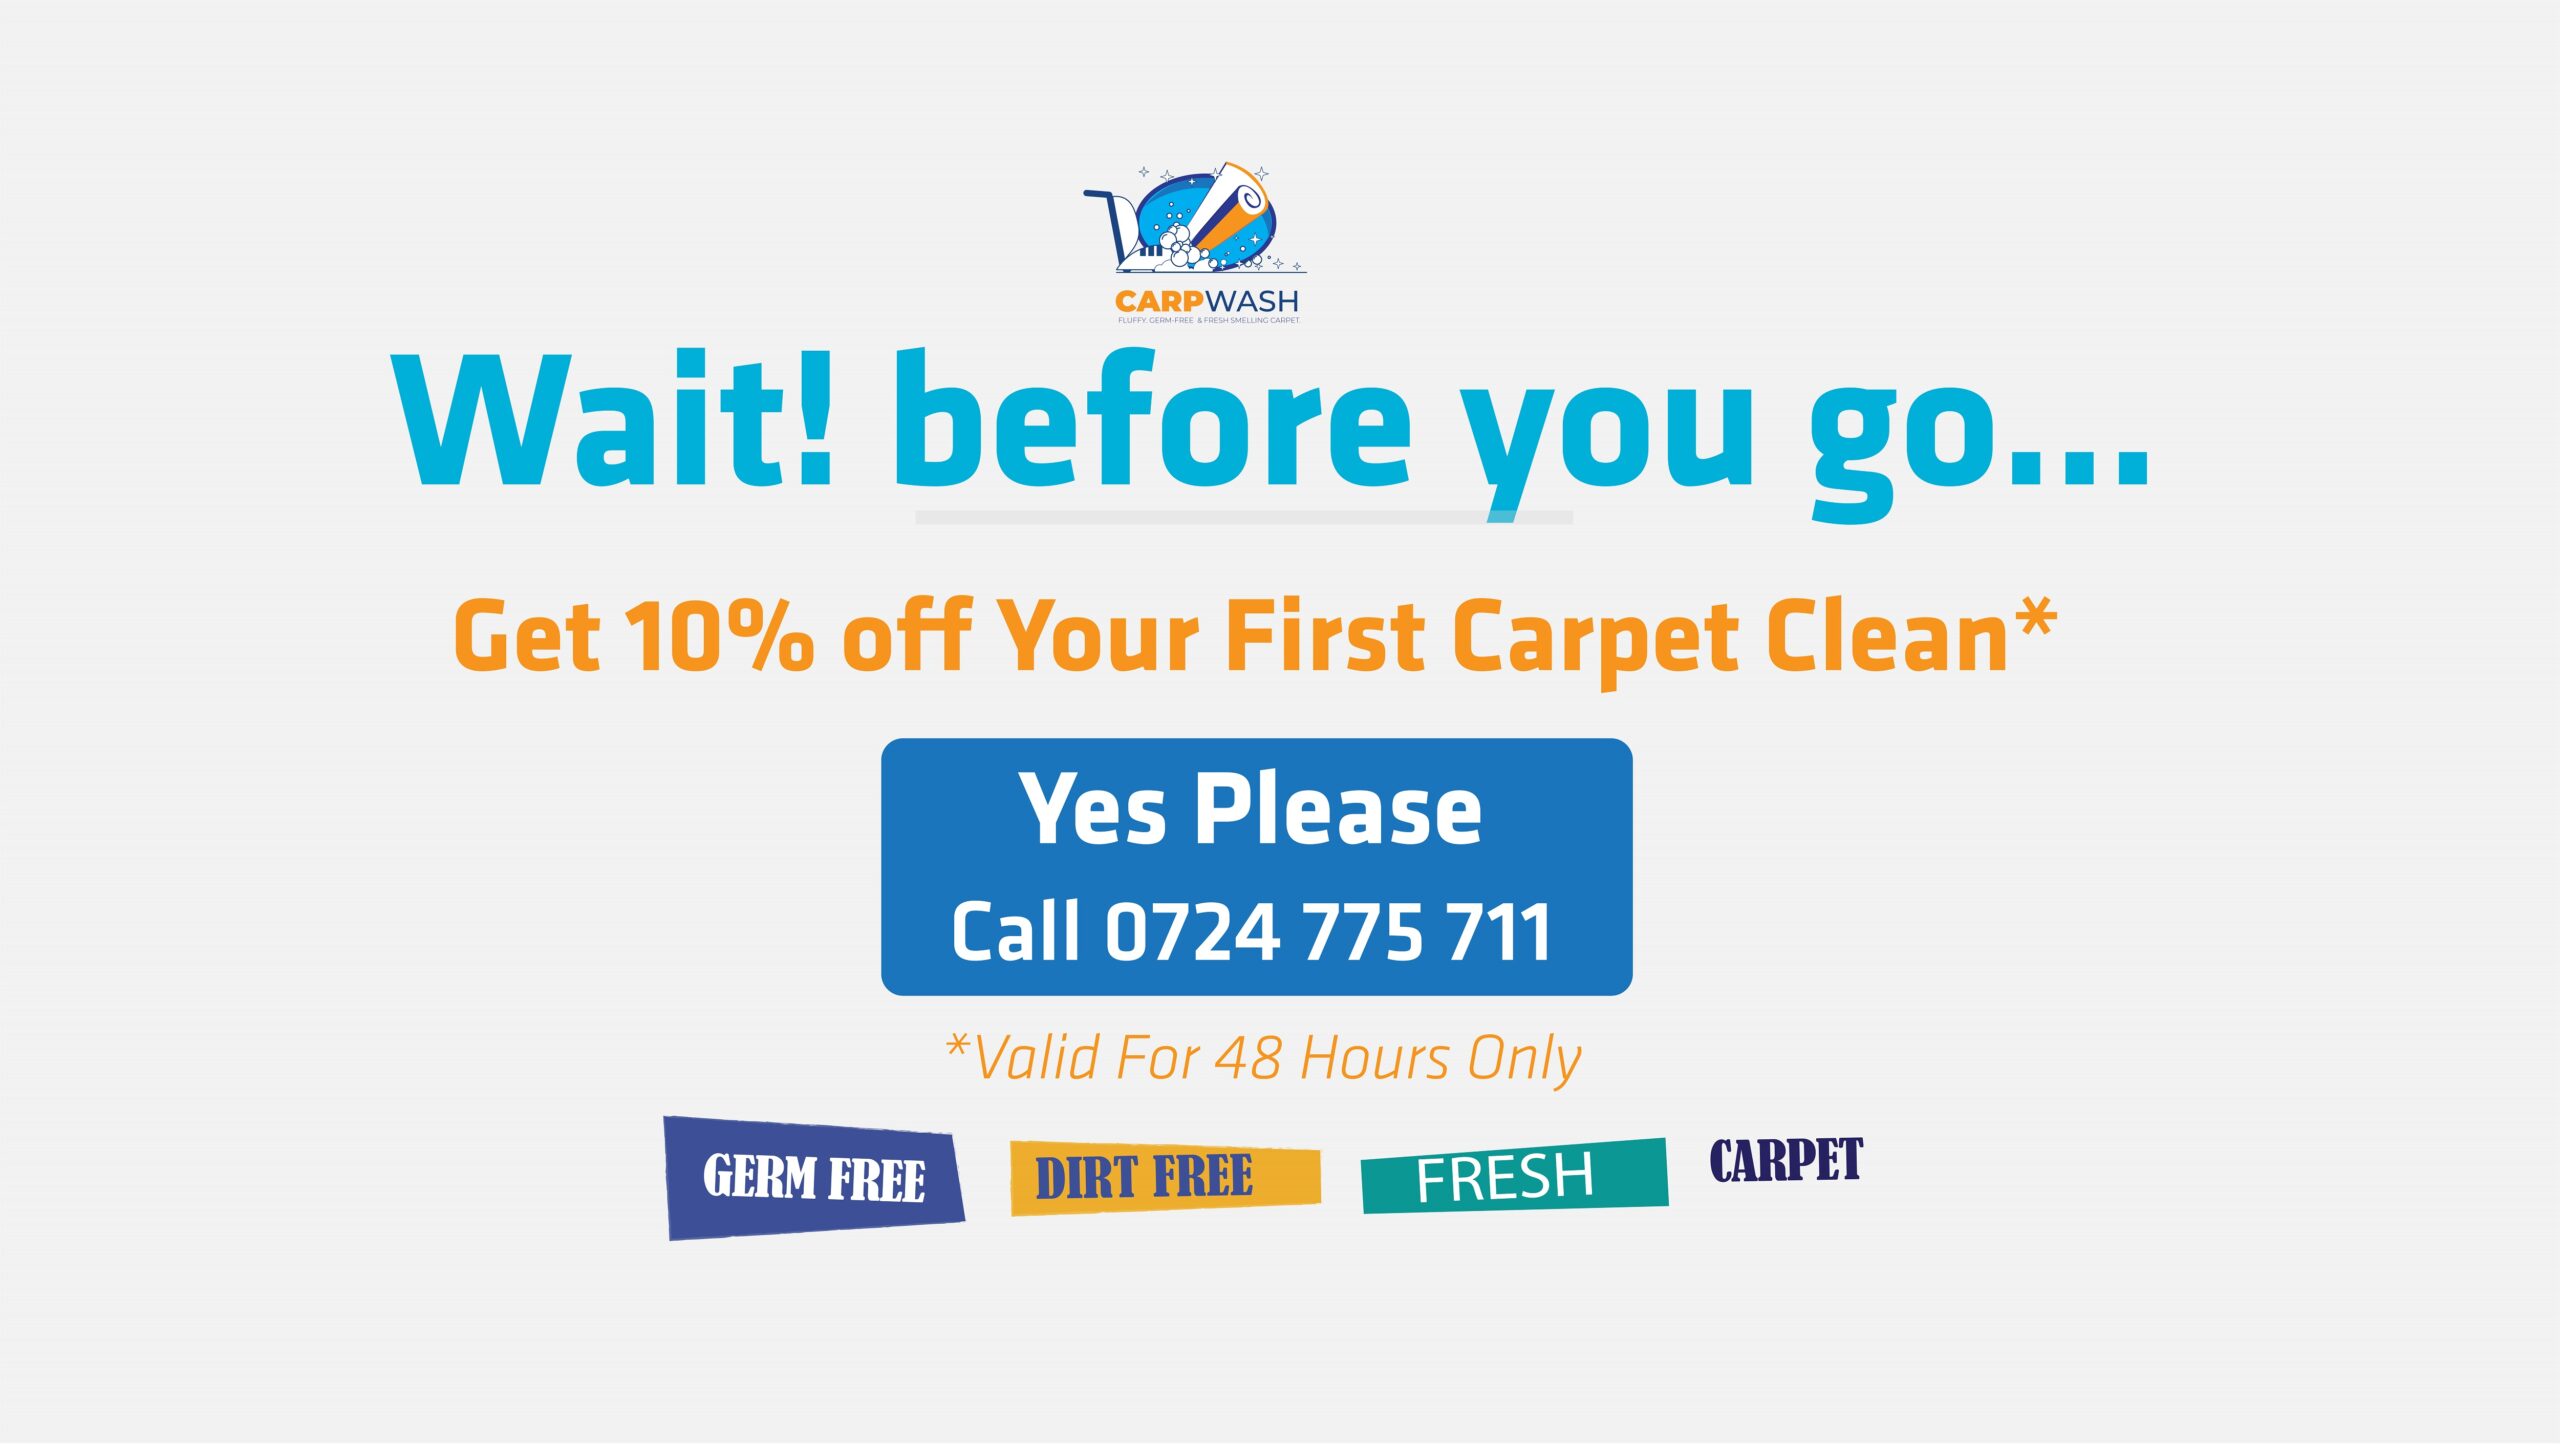 How do you clean carpet daily